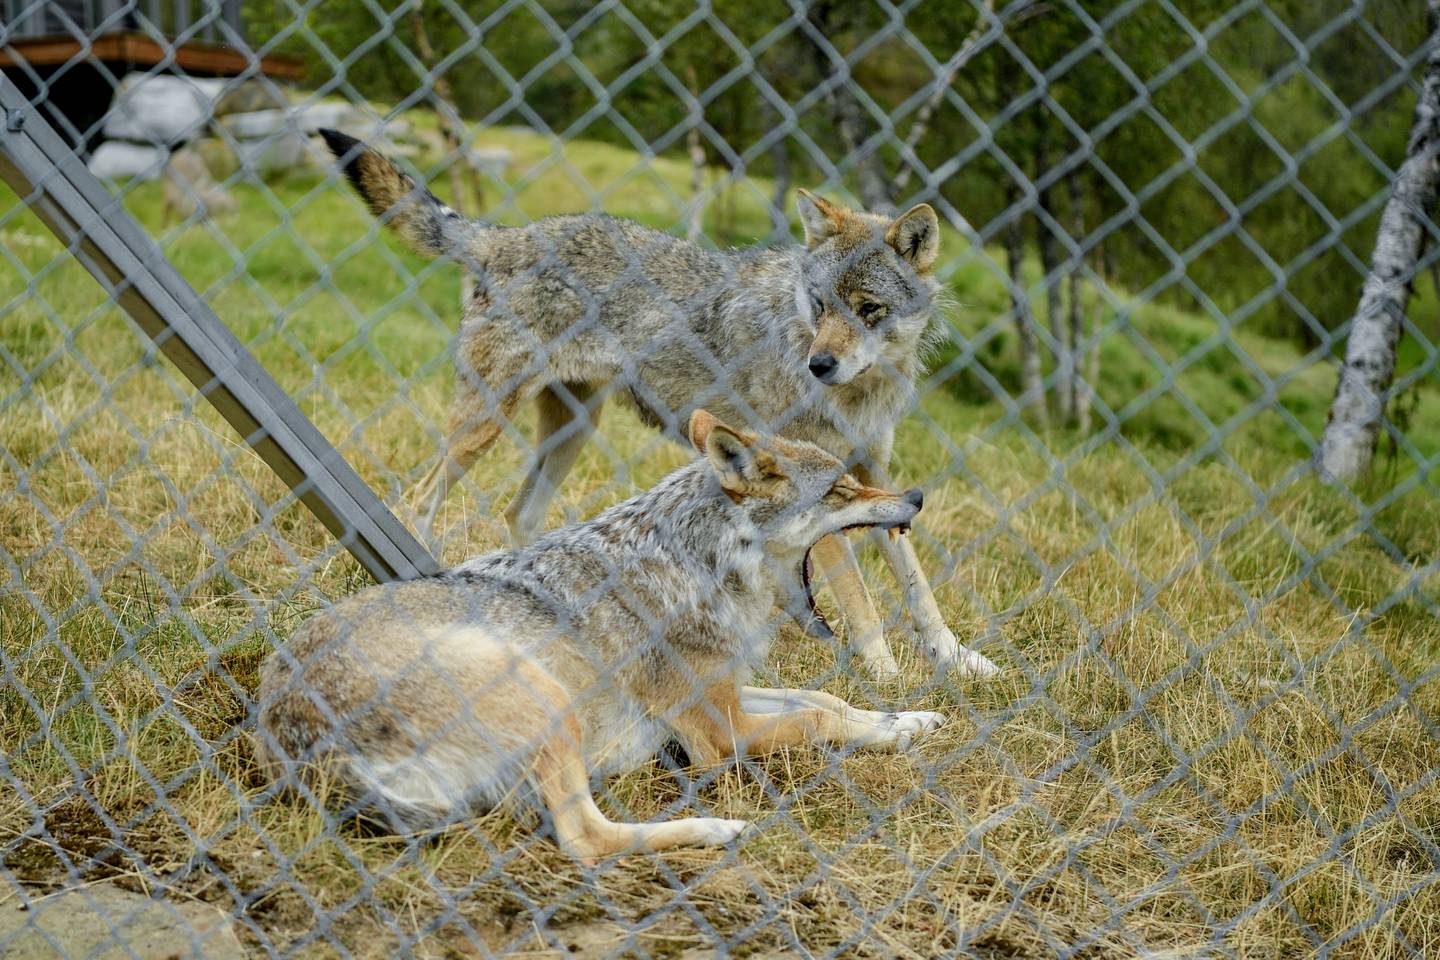 Seks levende hannulver skulle sendes fra Norge til Tyskland i fjor, men det ble det ikke noe av. Flere dyreparker i Norge har ulver. Disse hører hjemme i Polar Park i Bardufoss.